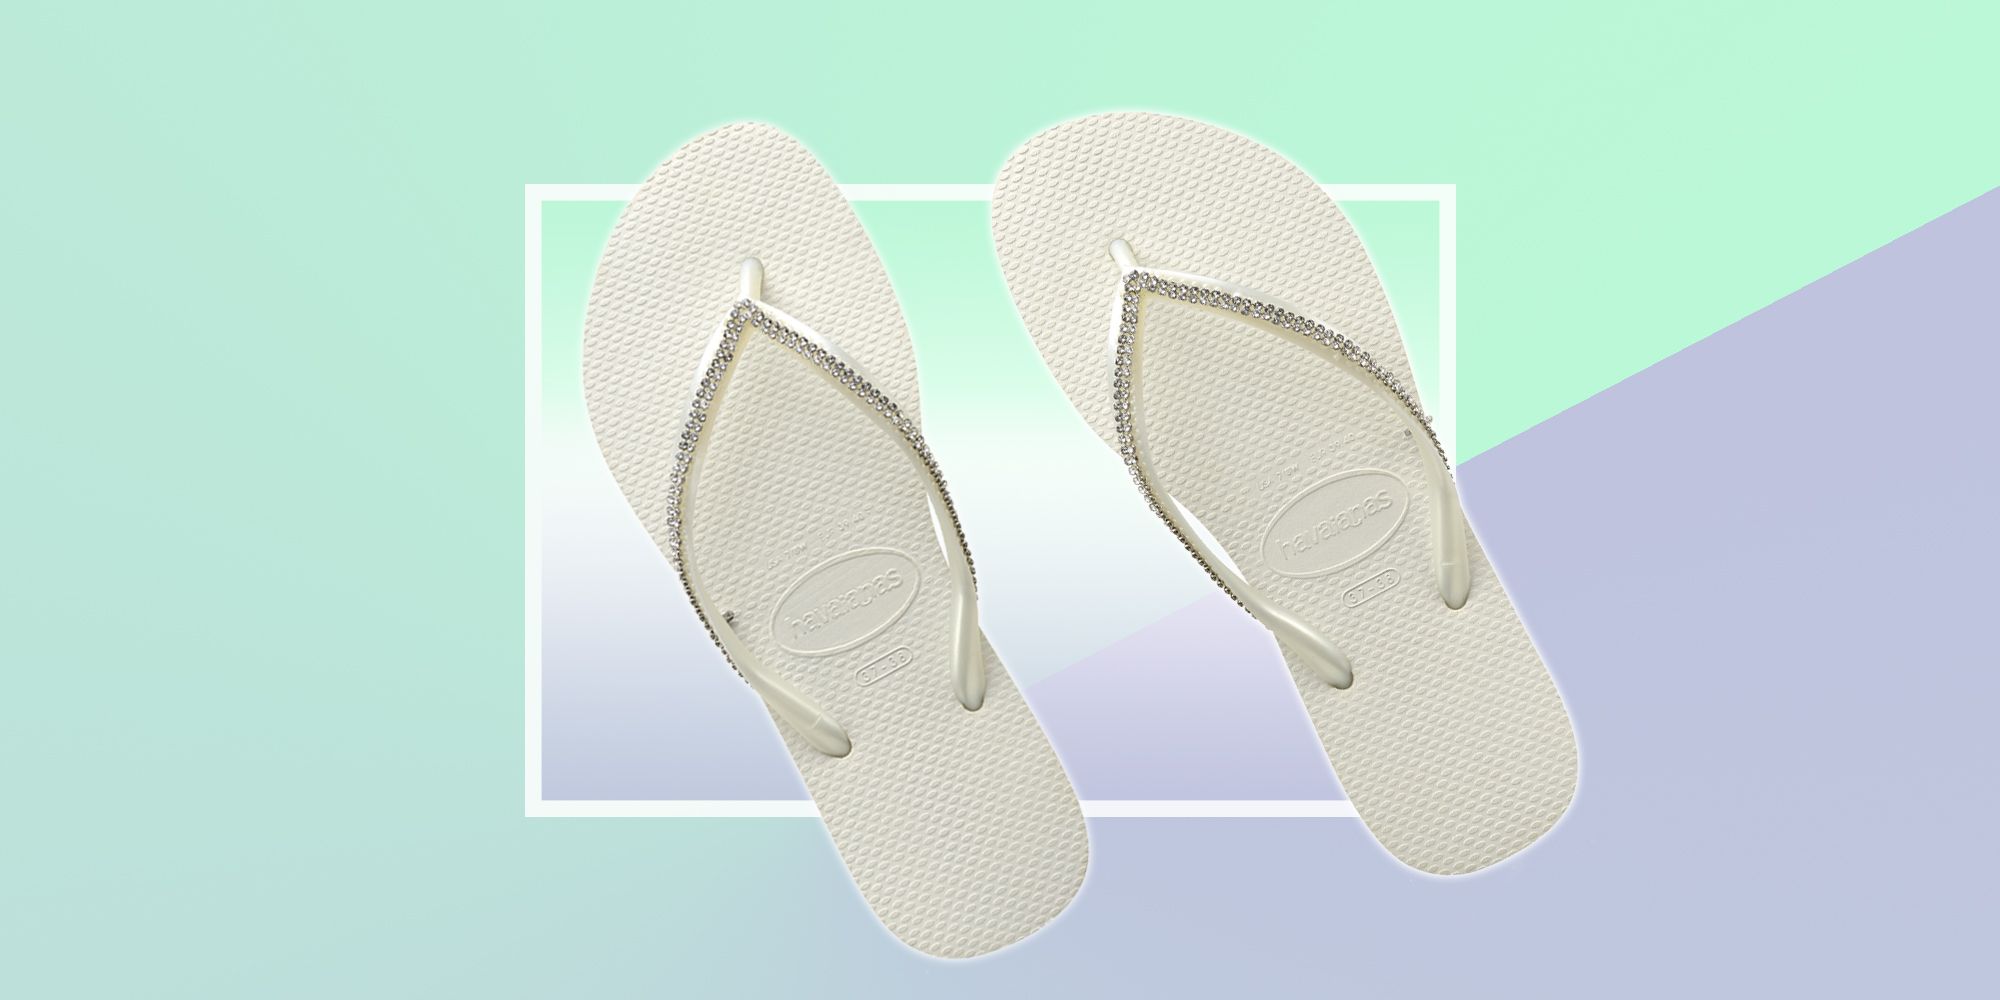 Havaianas bridal flip flops are now a 